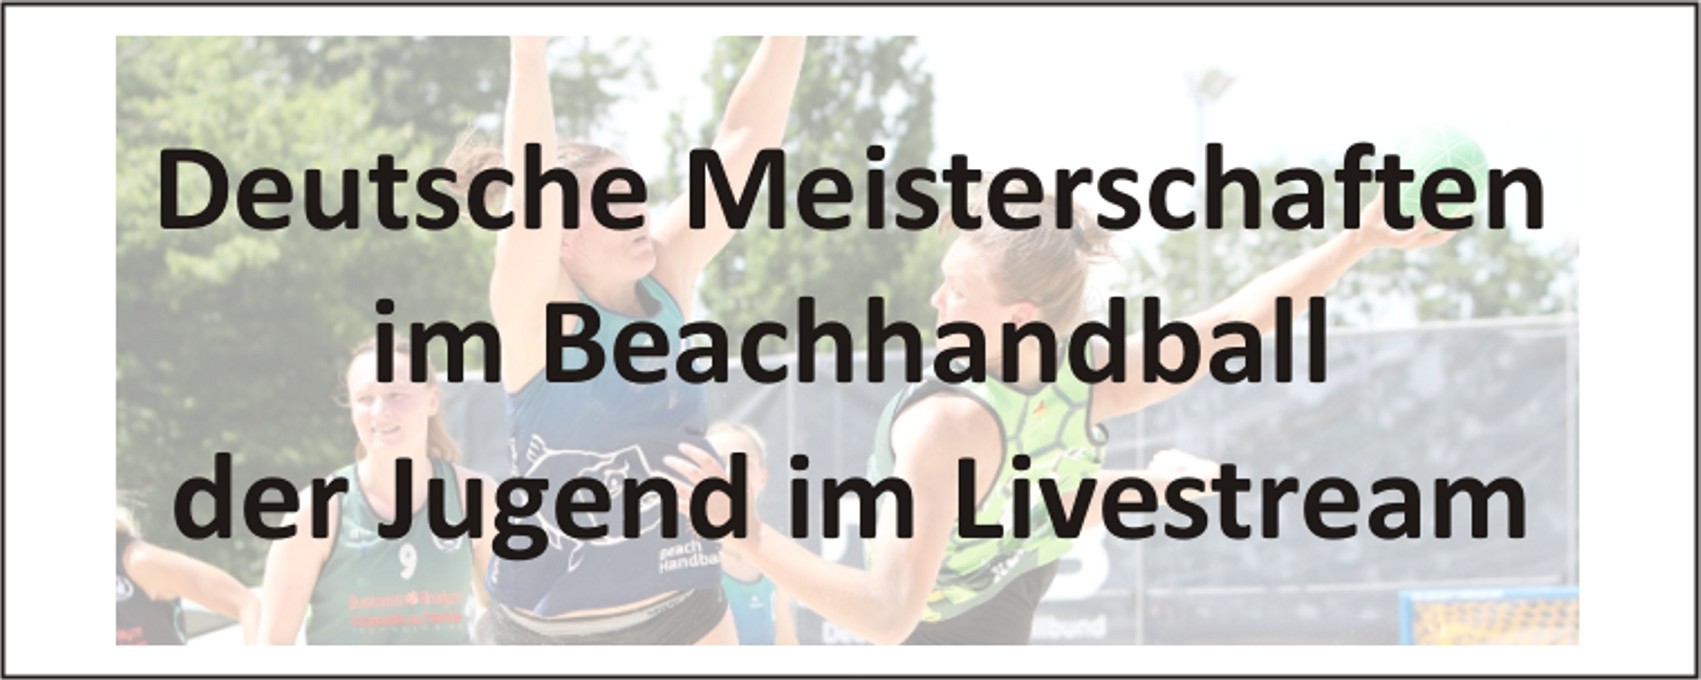 Deutsche Meisterschaften im Beachhandball der Jugend zum Anschauen